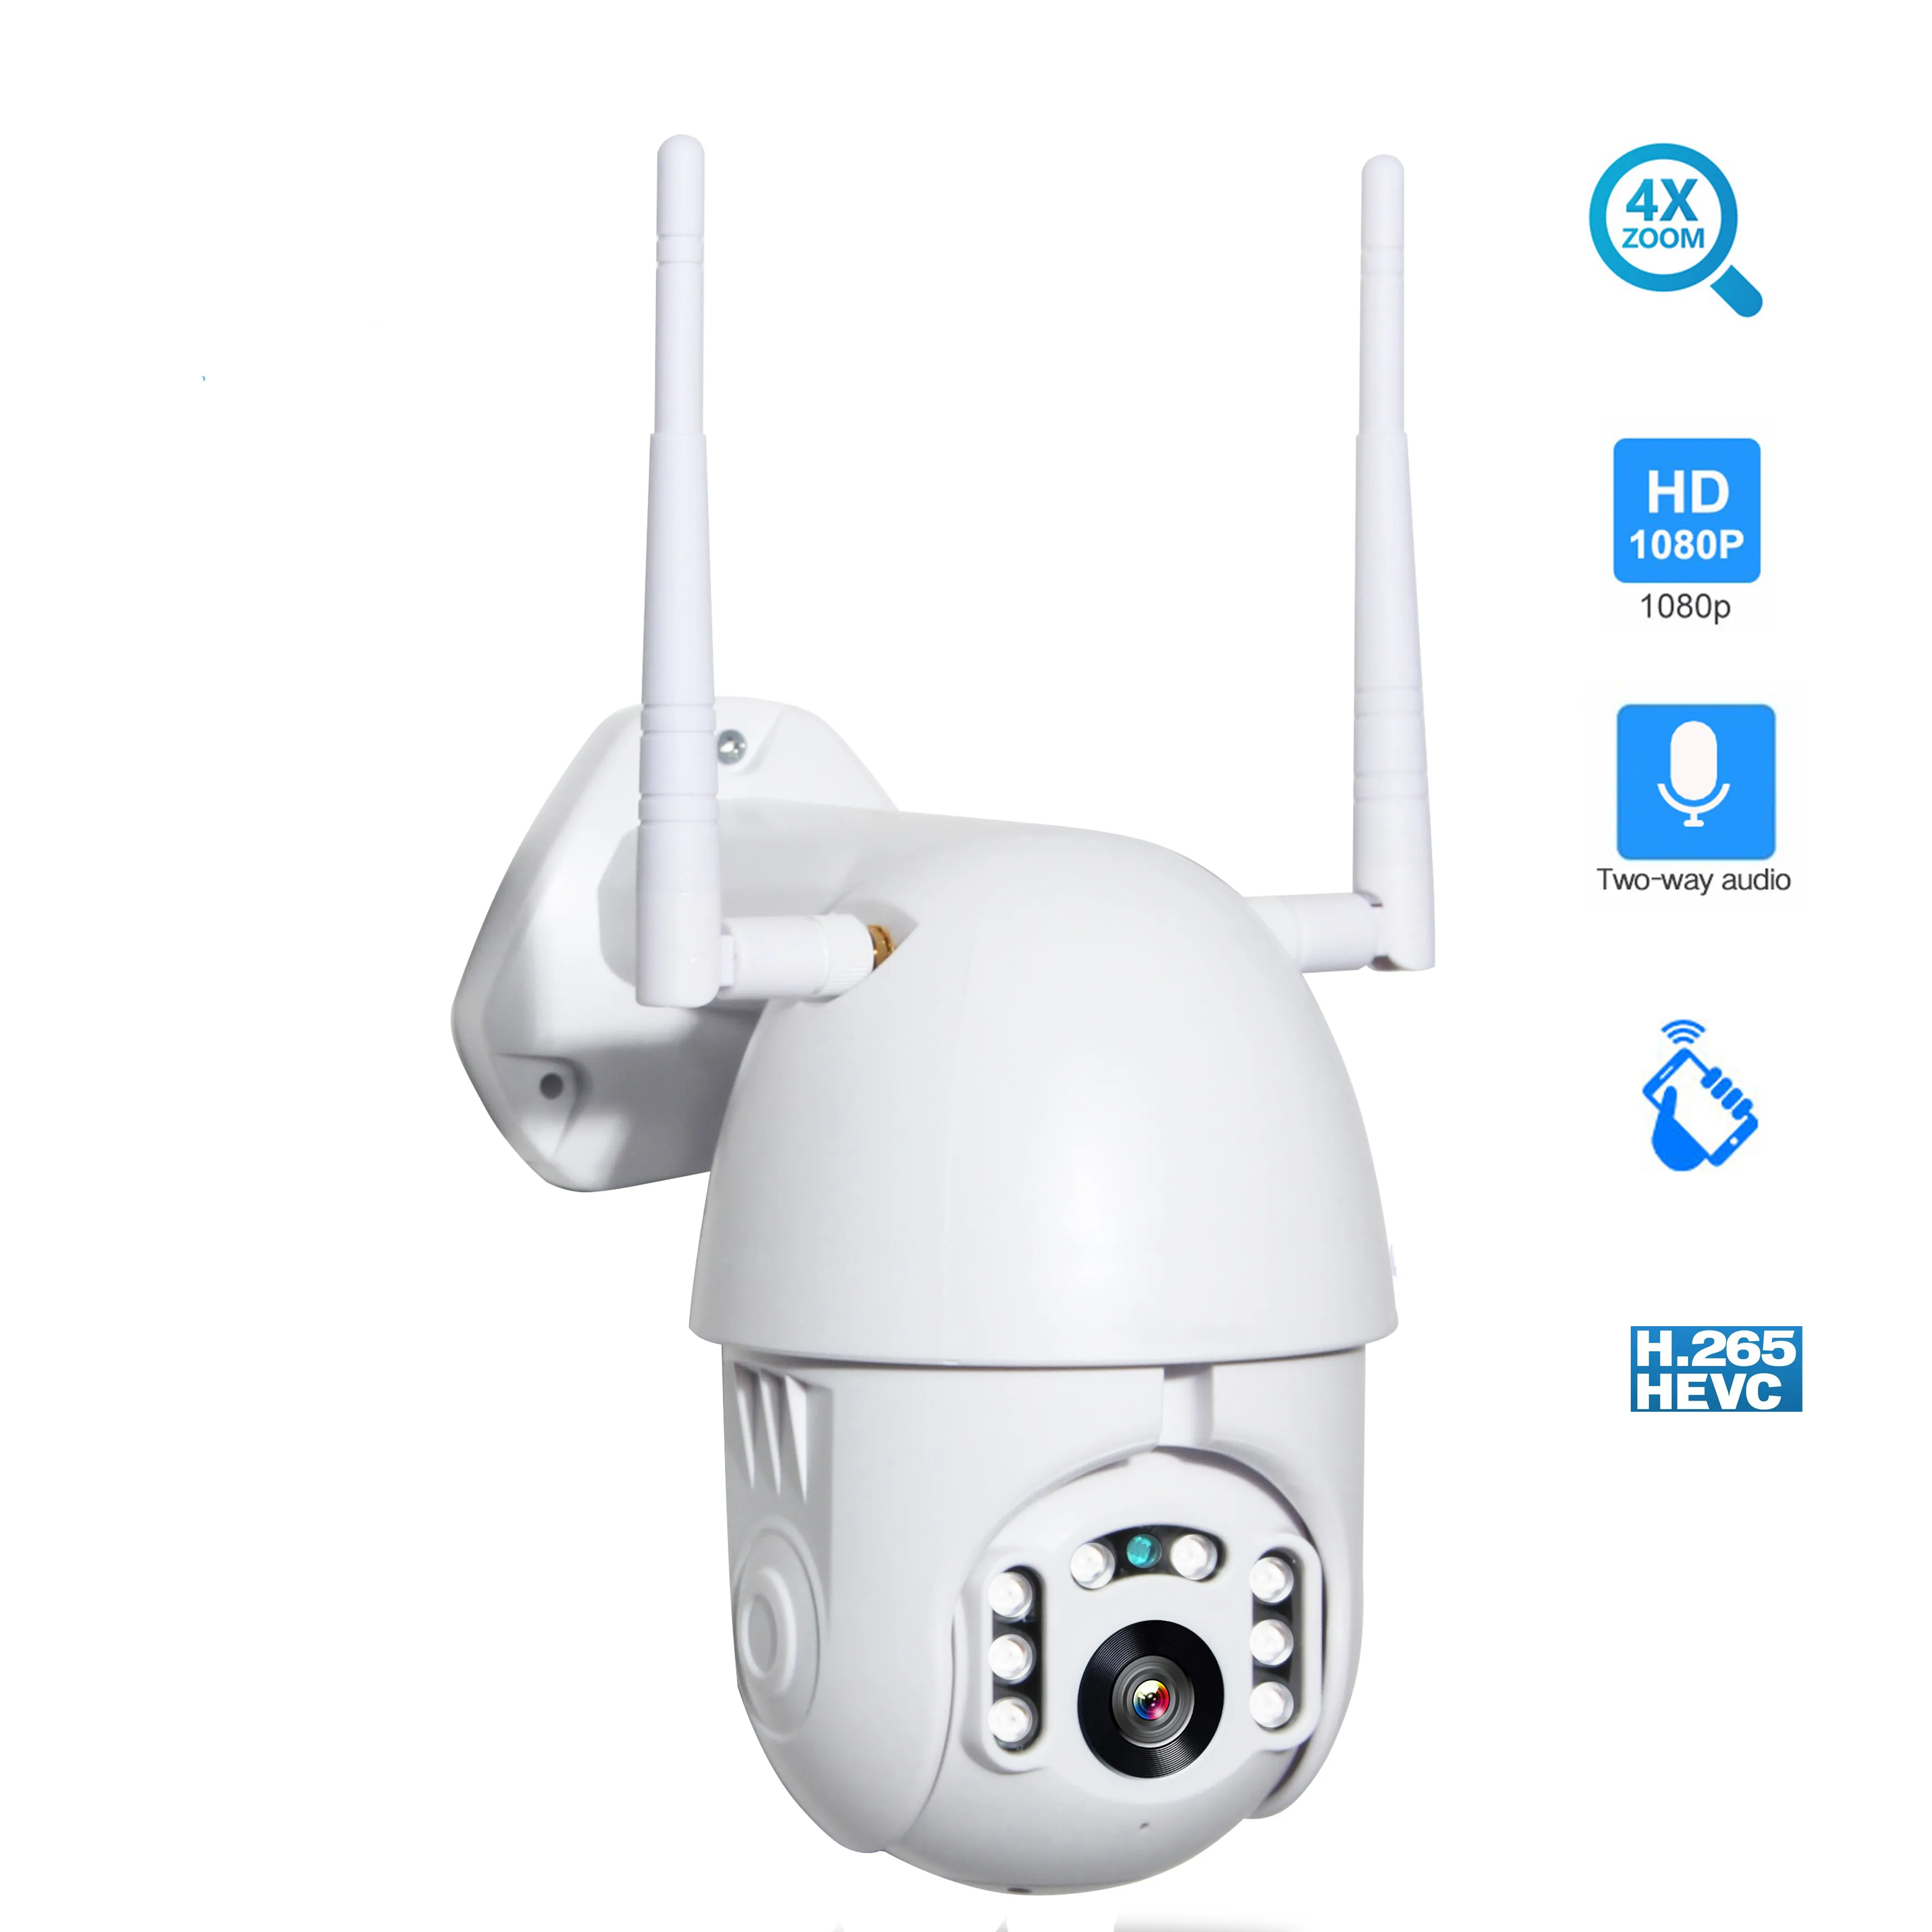 4X Digital Zoom H.265X 1080p PTZ IP Camera Outdoor Speed Dome CCTV Security Cameras WIFI Exterior IR Home Surveilance